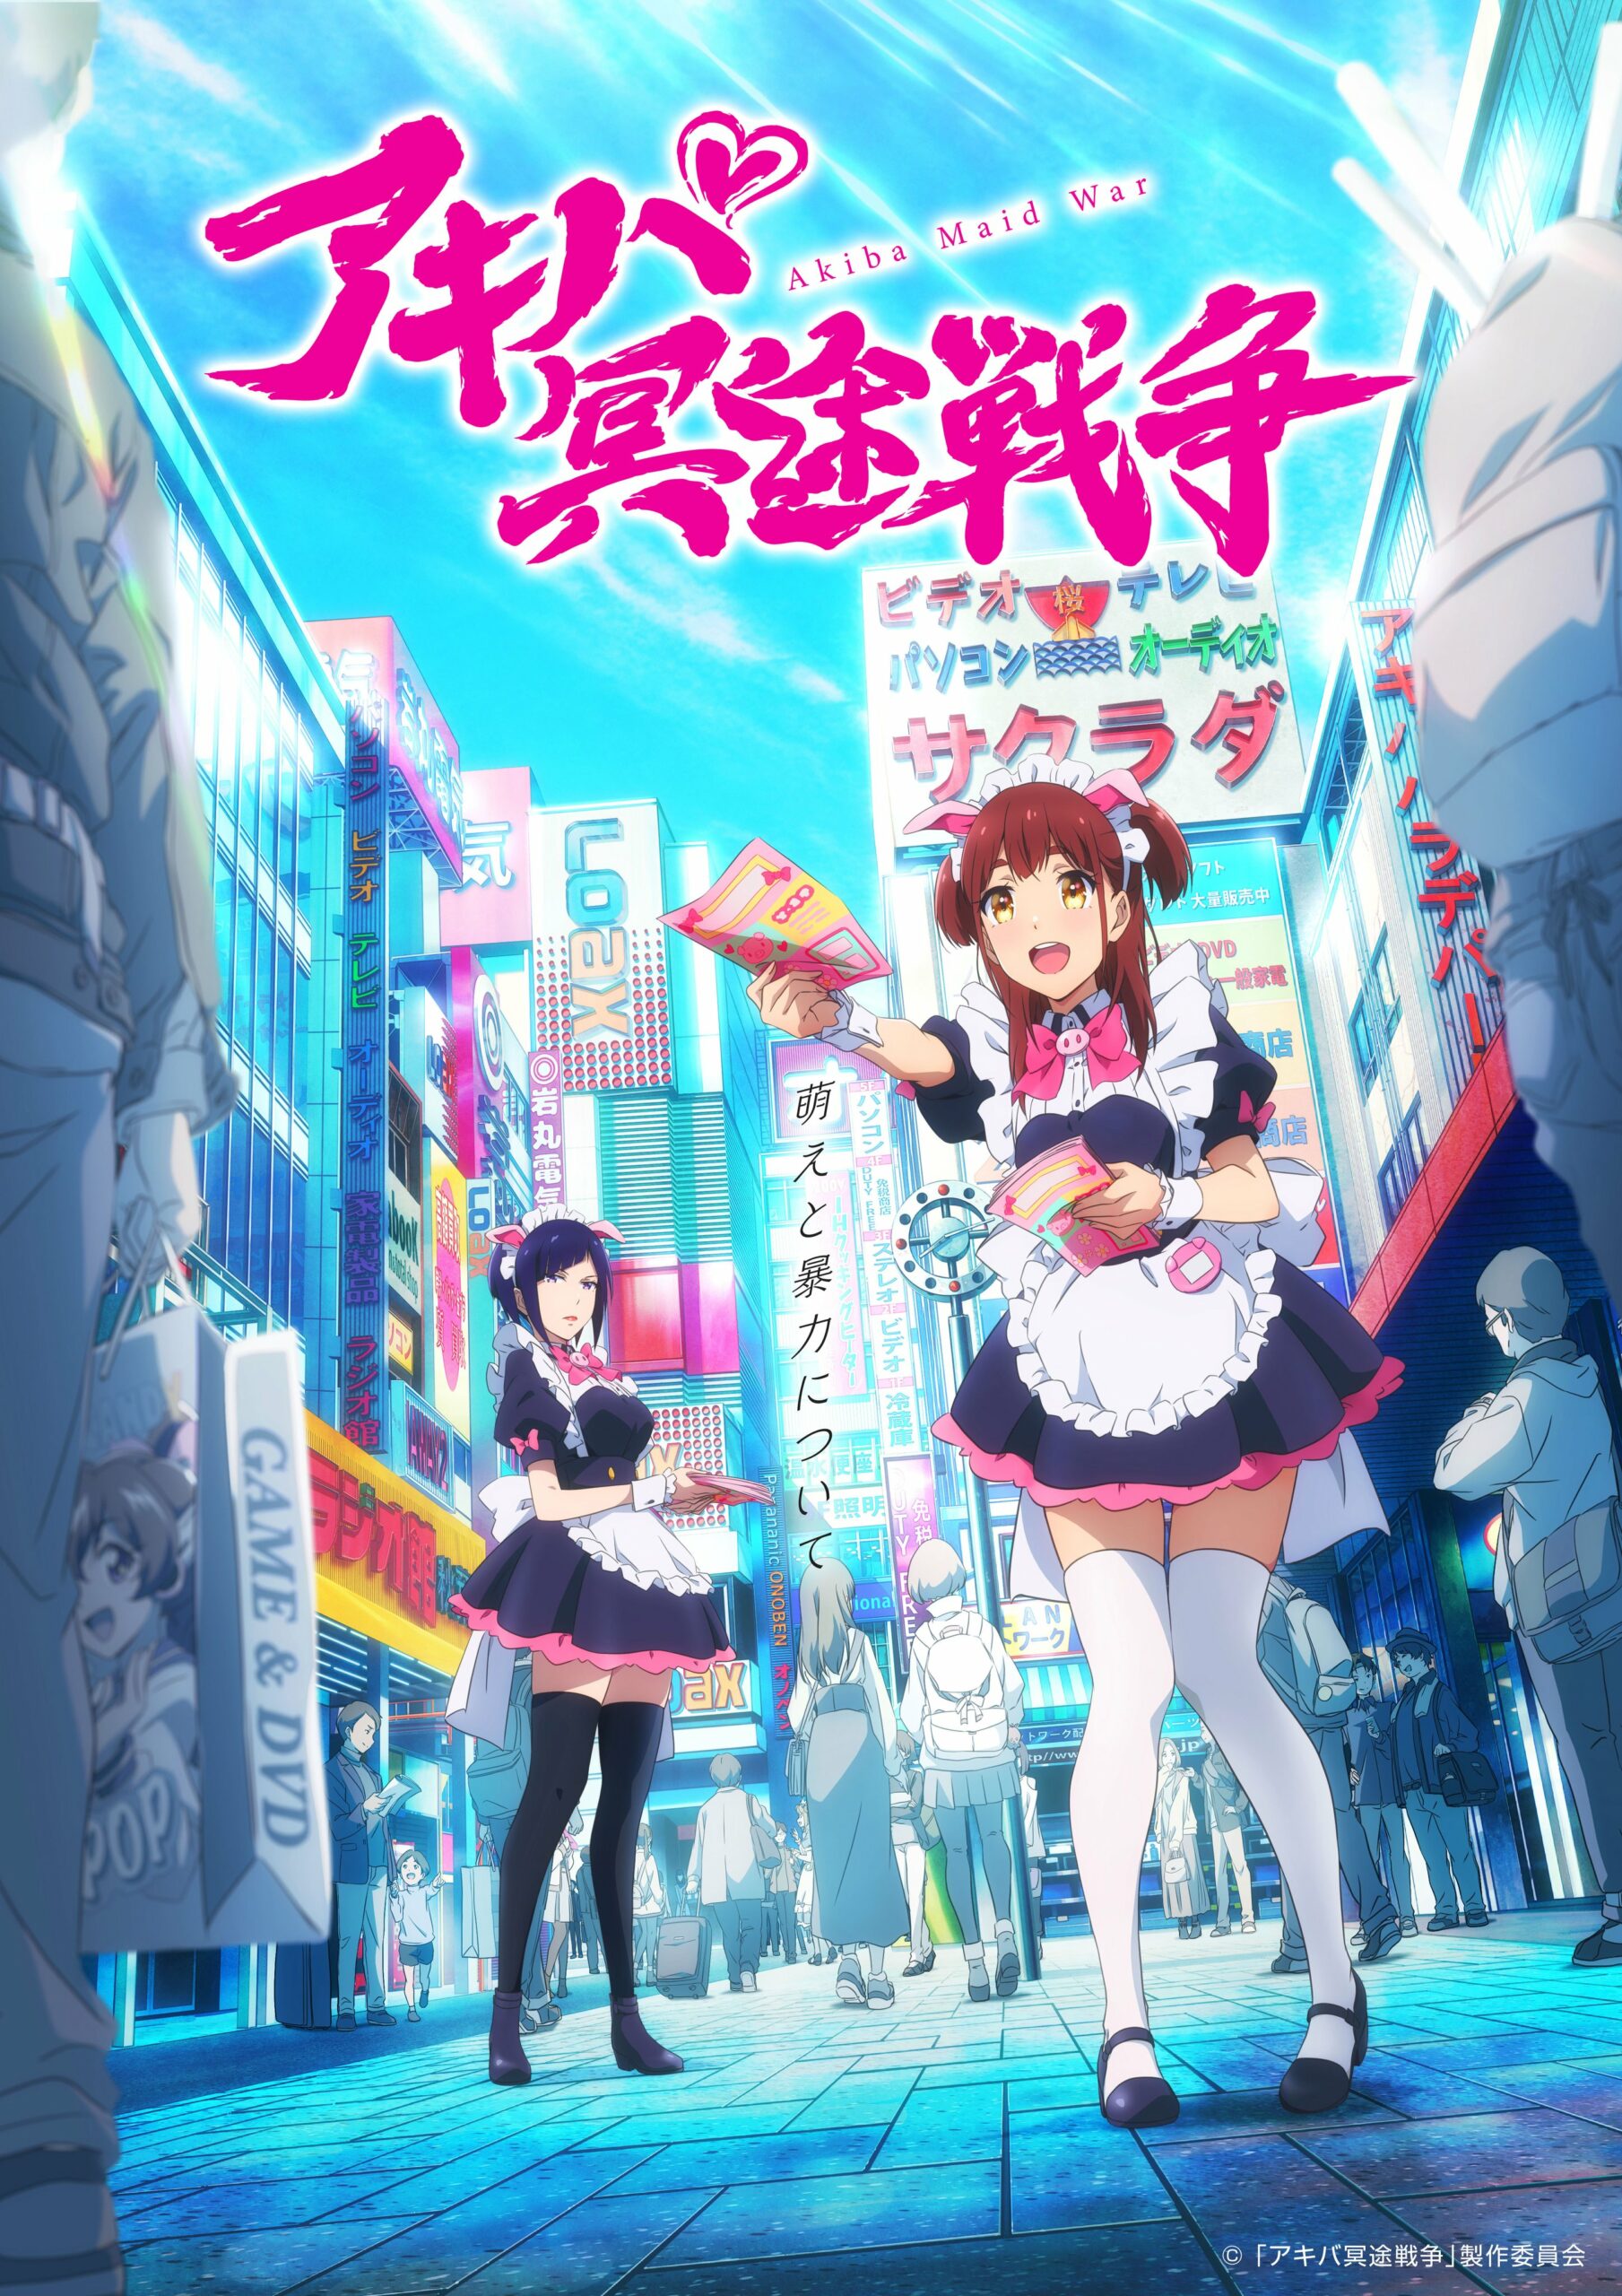 Futoku no Guild TV Anime Announced - Anime Corner